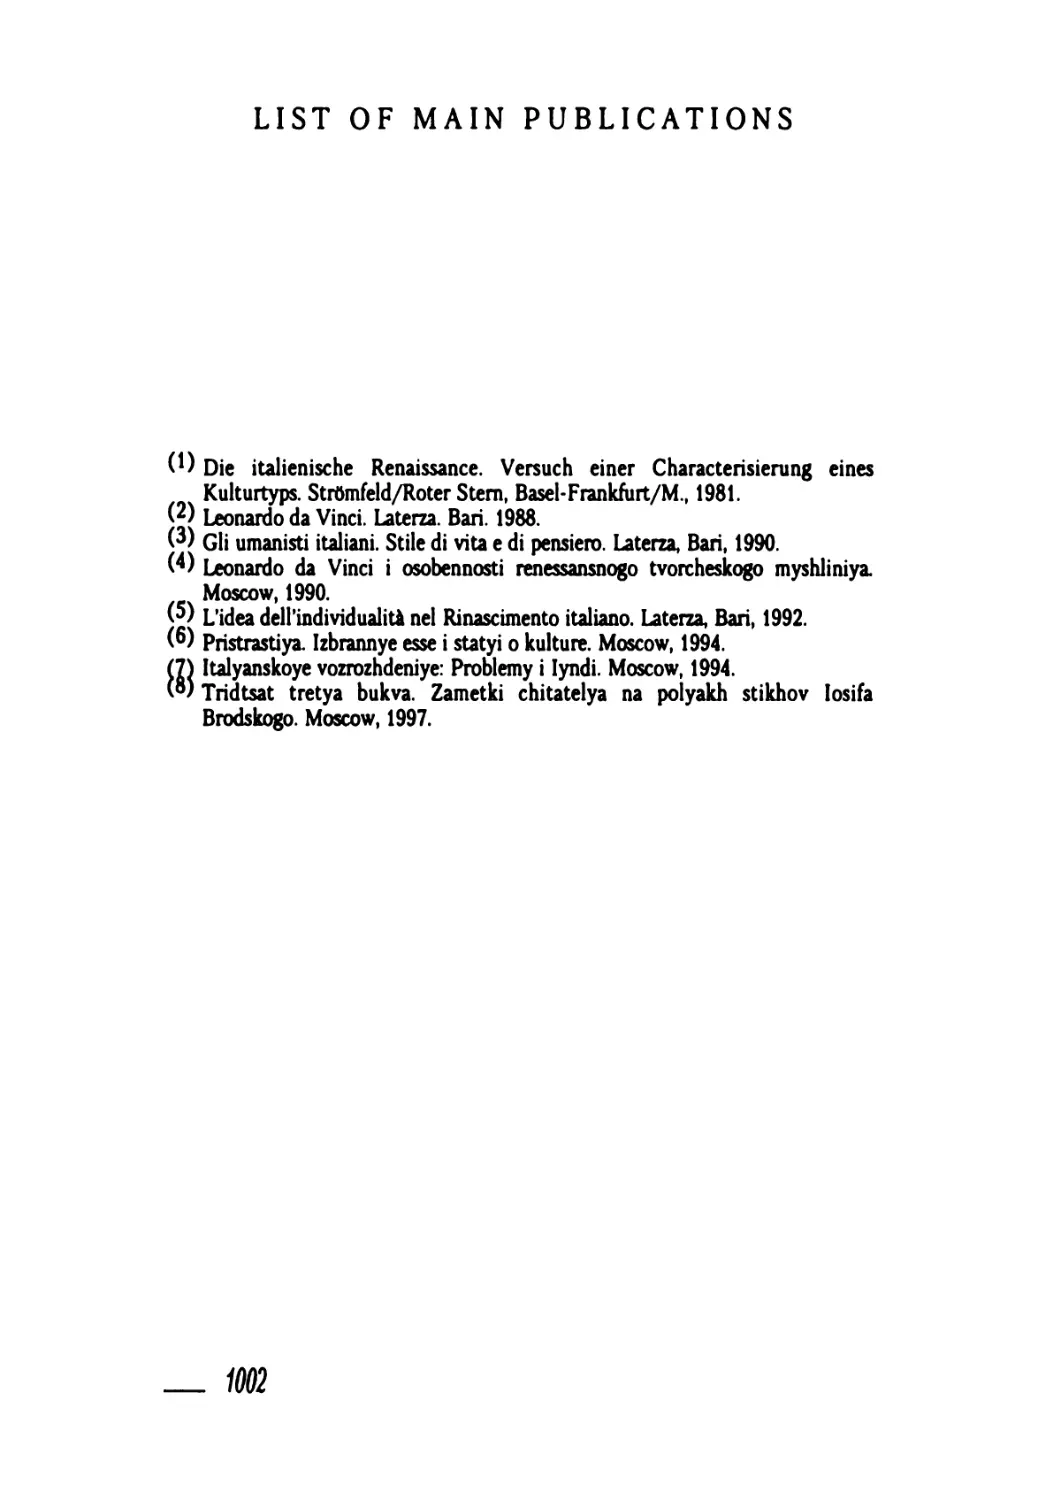 List of main publications